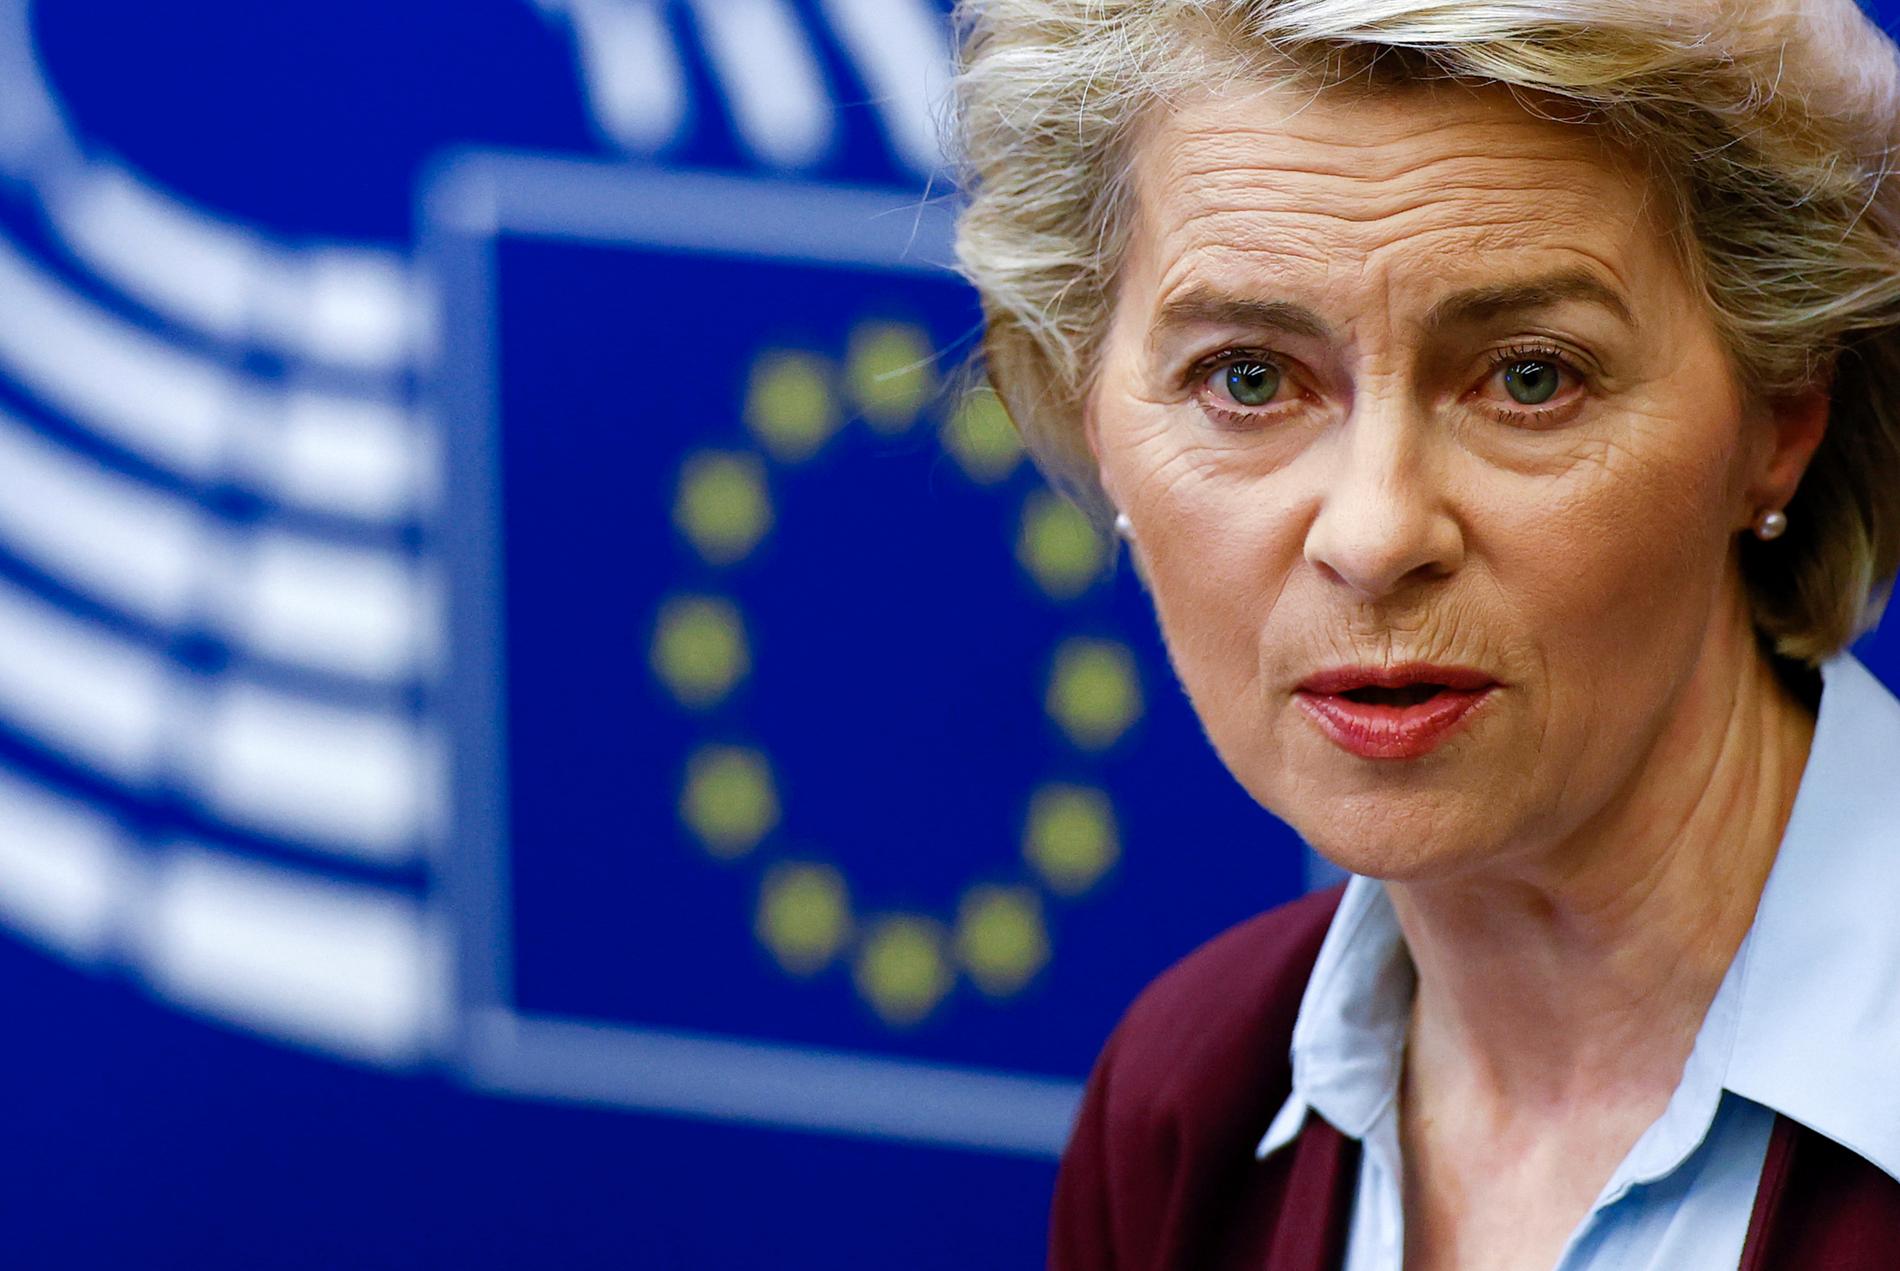 EU-kommissionens ordförande Ursula van der Leyen. Arkivbild.